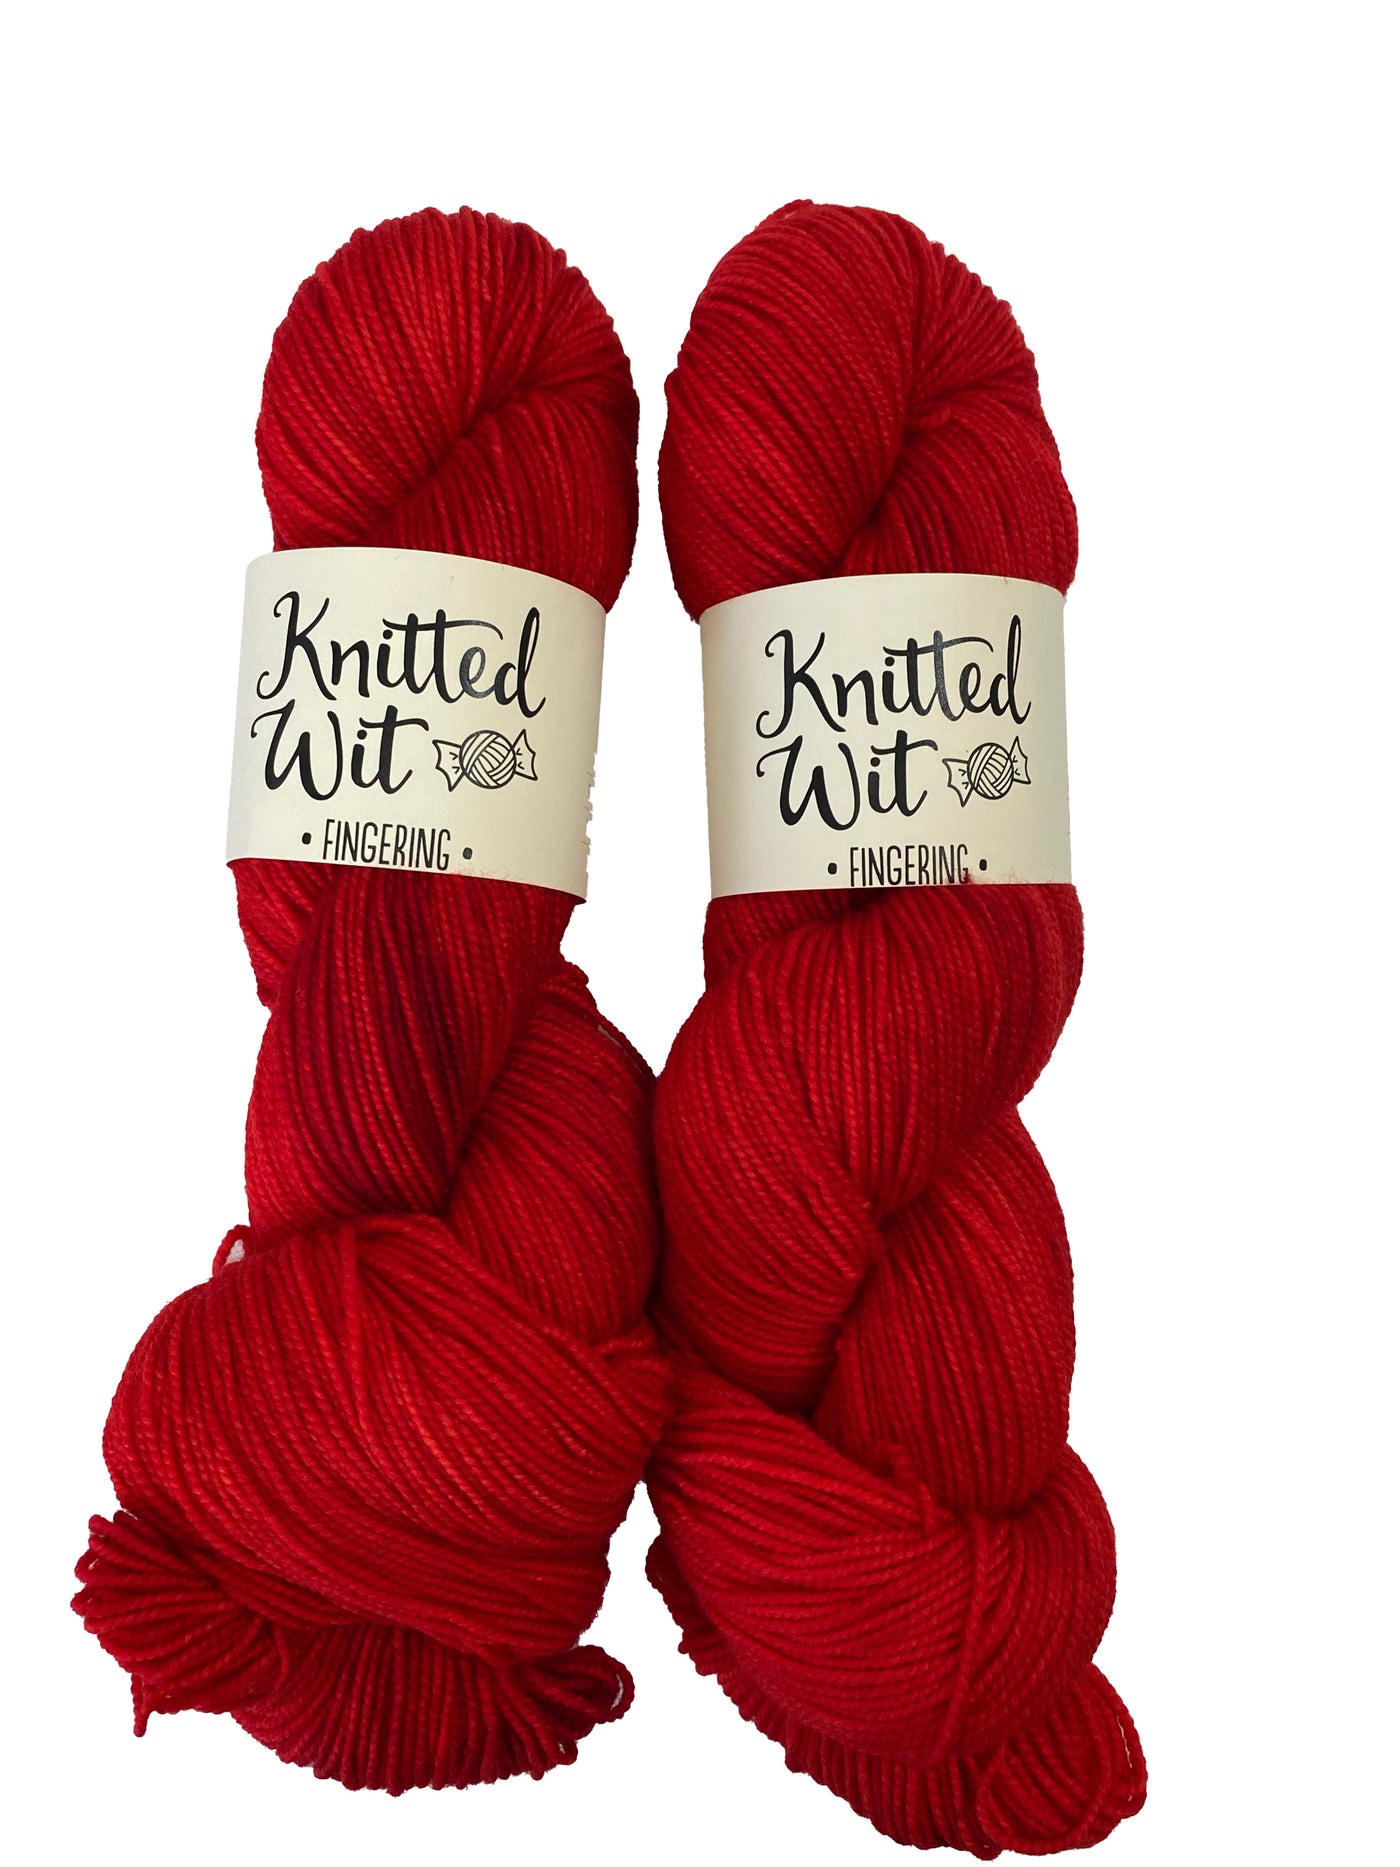 Knitted Wit Fingering Semi-Solids Superwash Merino Wool Knitting Yarn